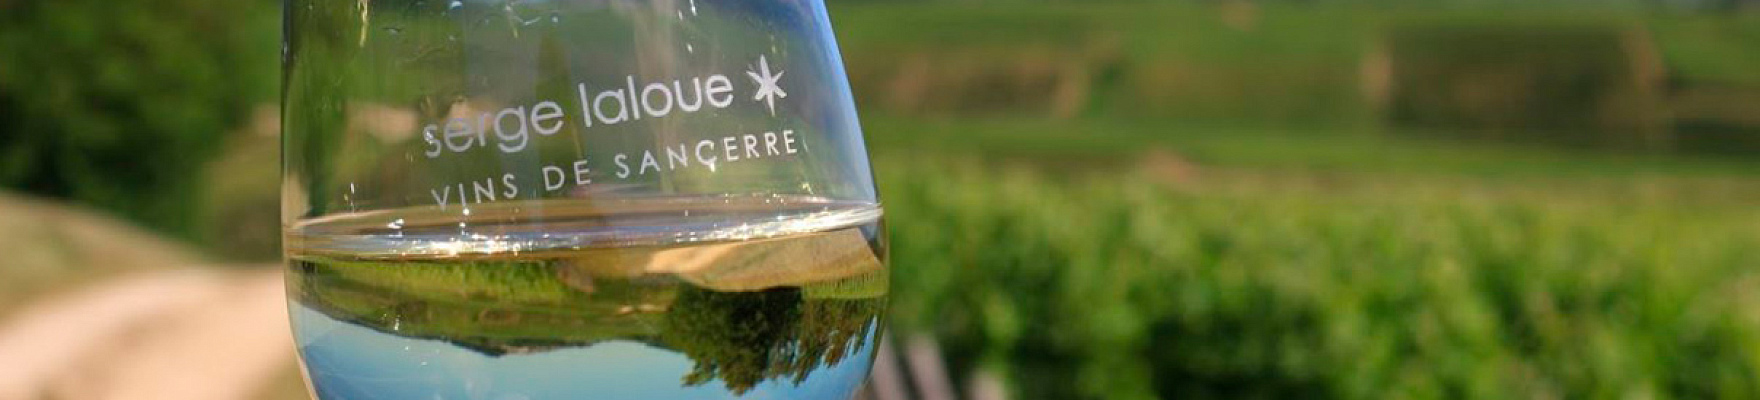 Copa de vino del Domaine Serge Laloue